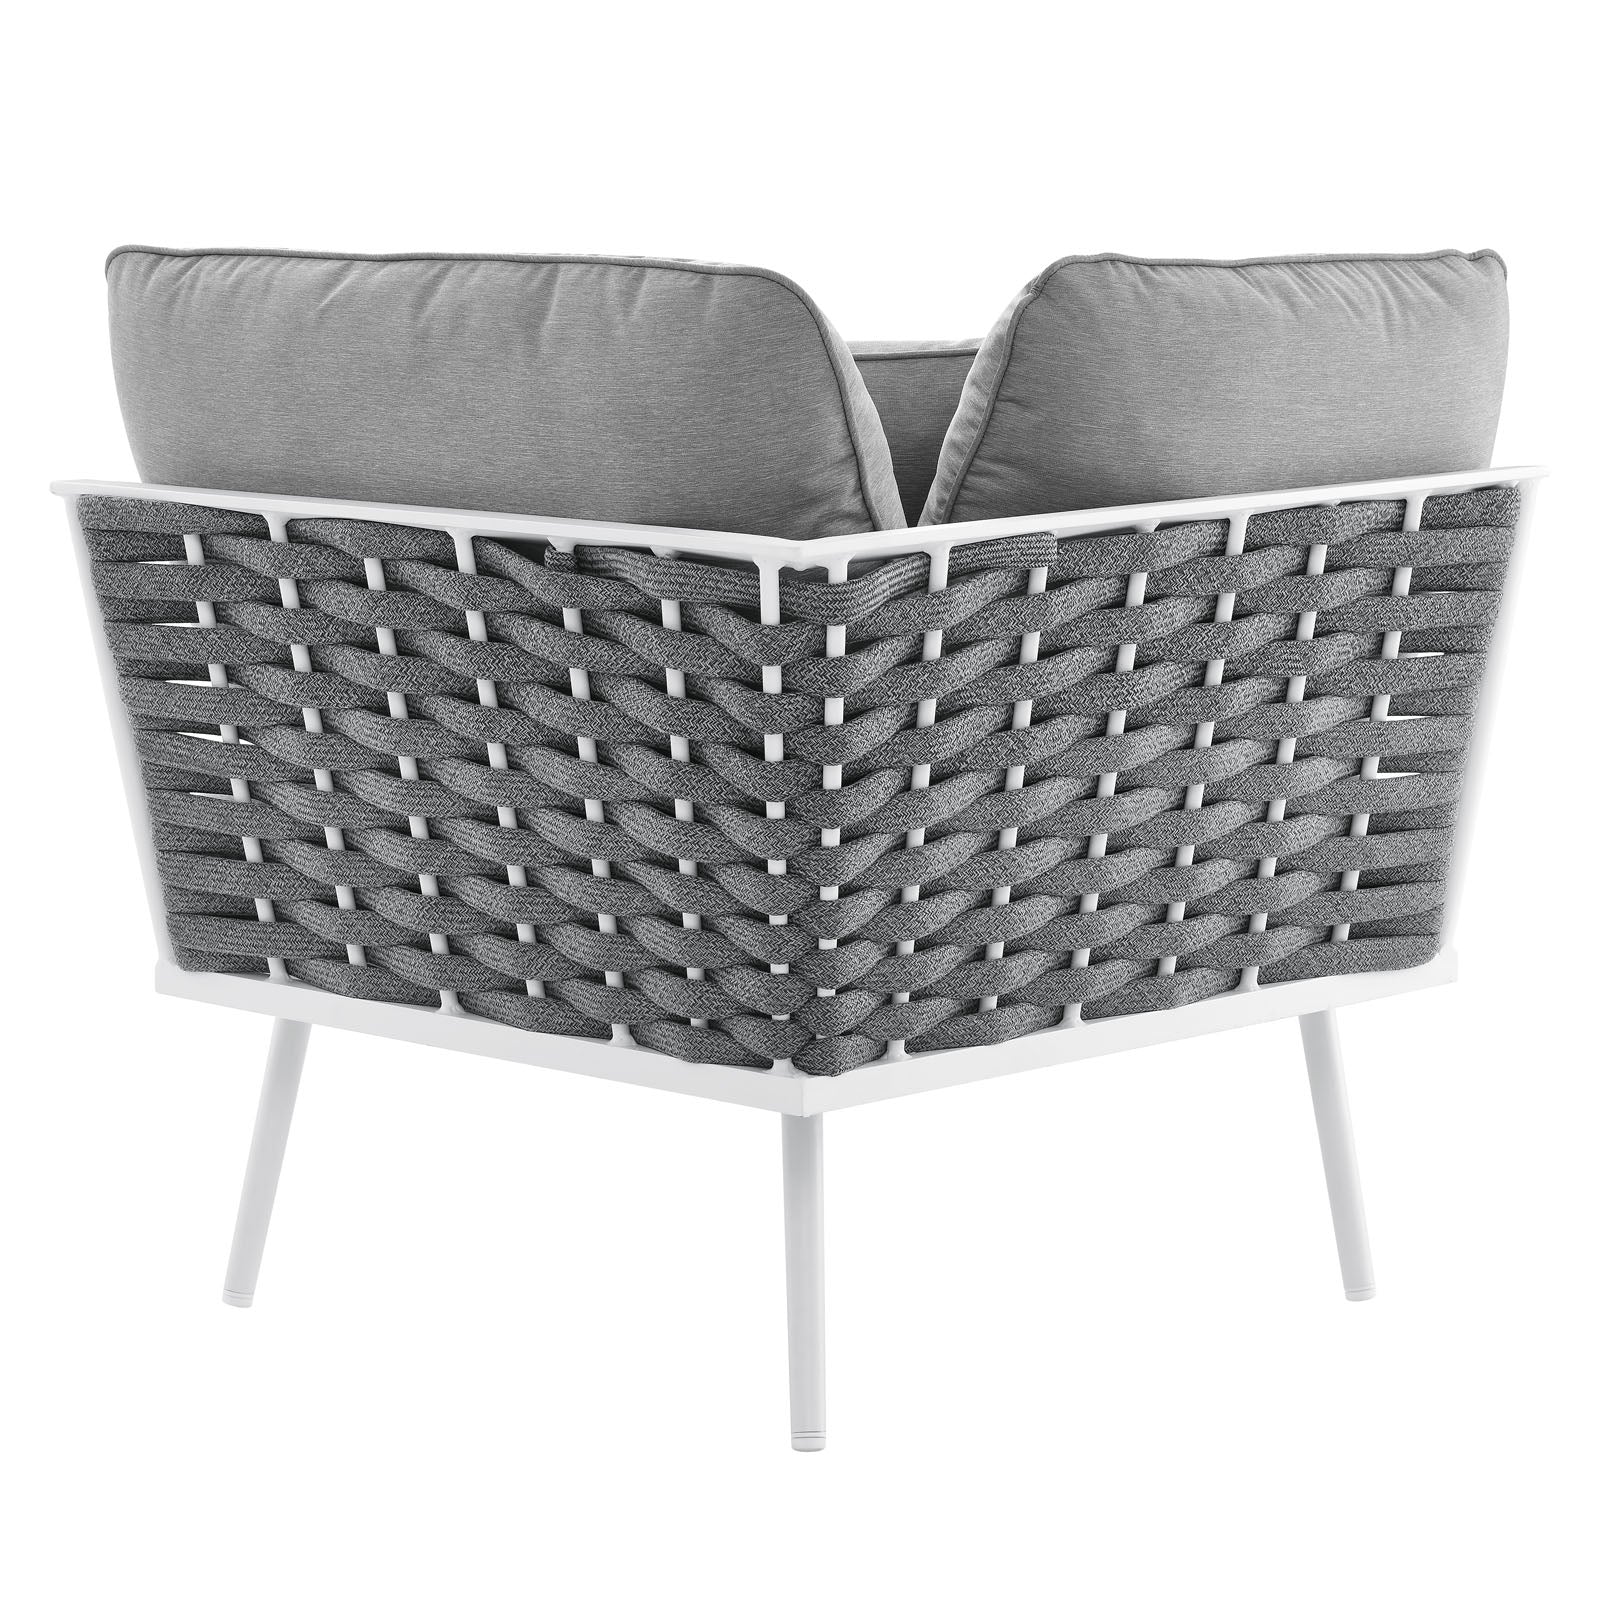 Modway - Stance Outdoor Patio Aluminum Corner Chair - EEI-5567